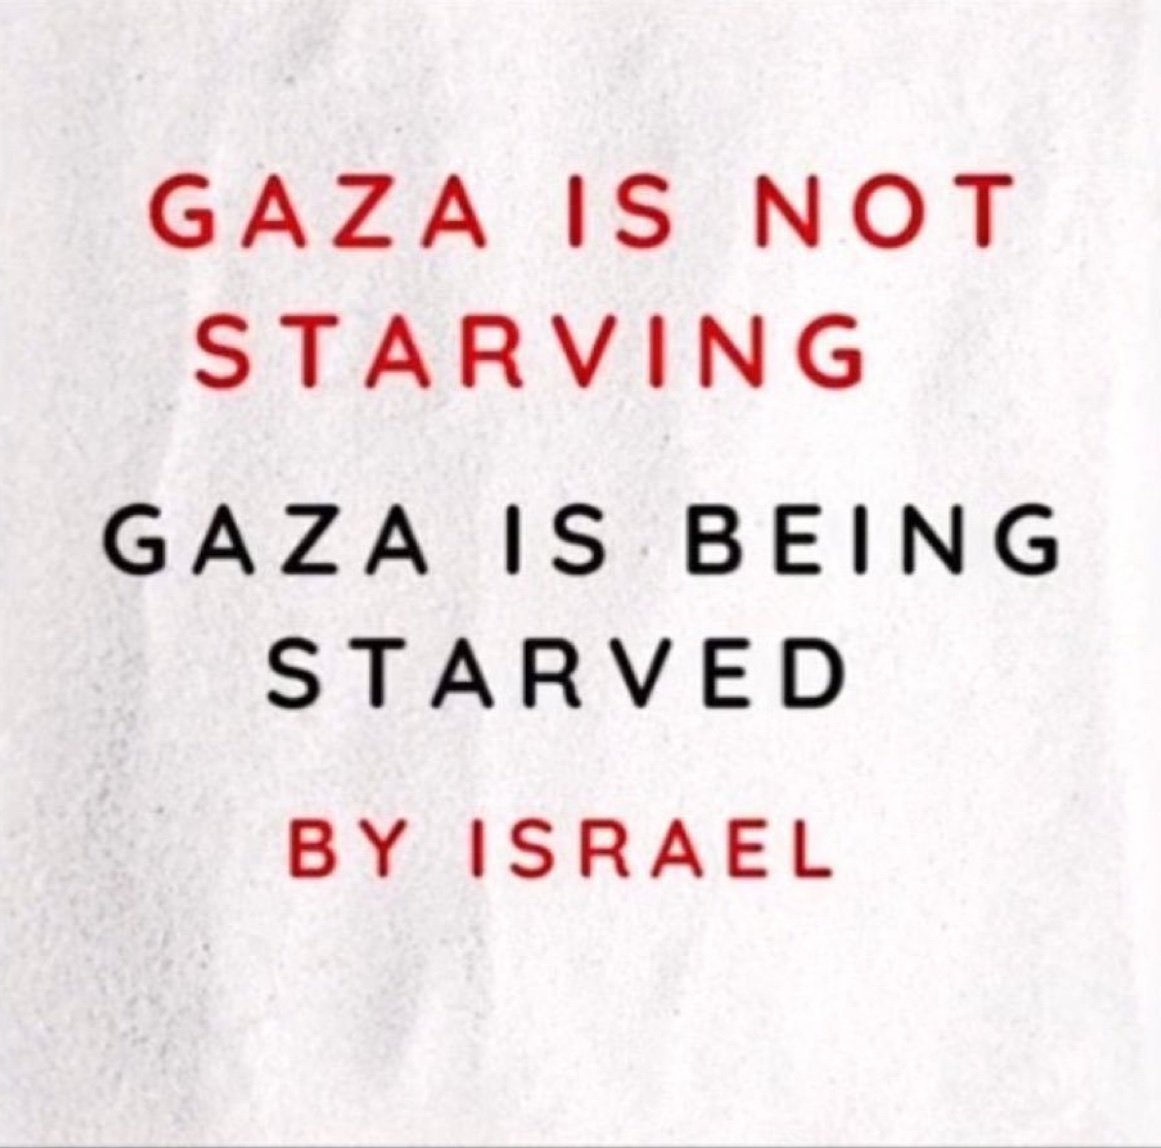 Gaza is Being Starved By Israel.
#Gaza_Solidarity_Night
#GazaIsStarving